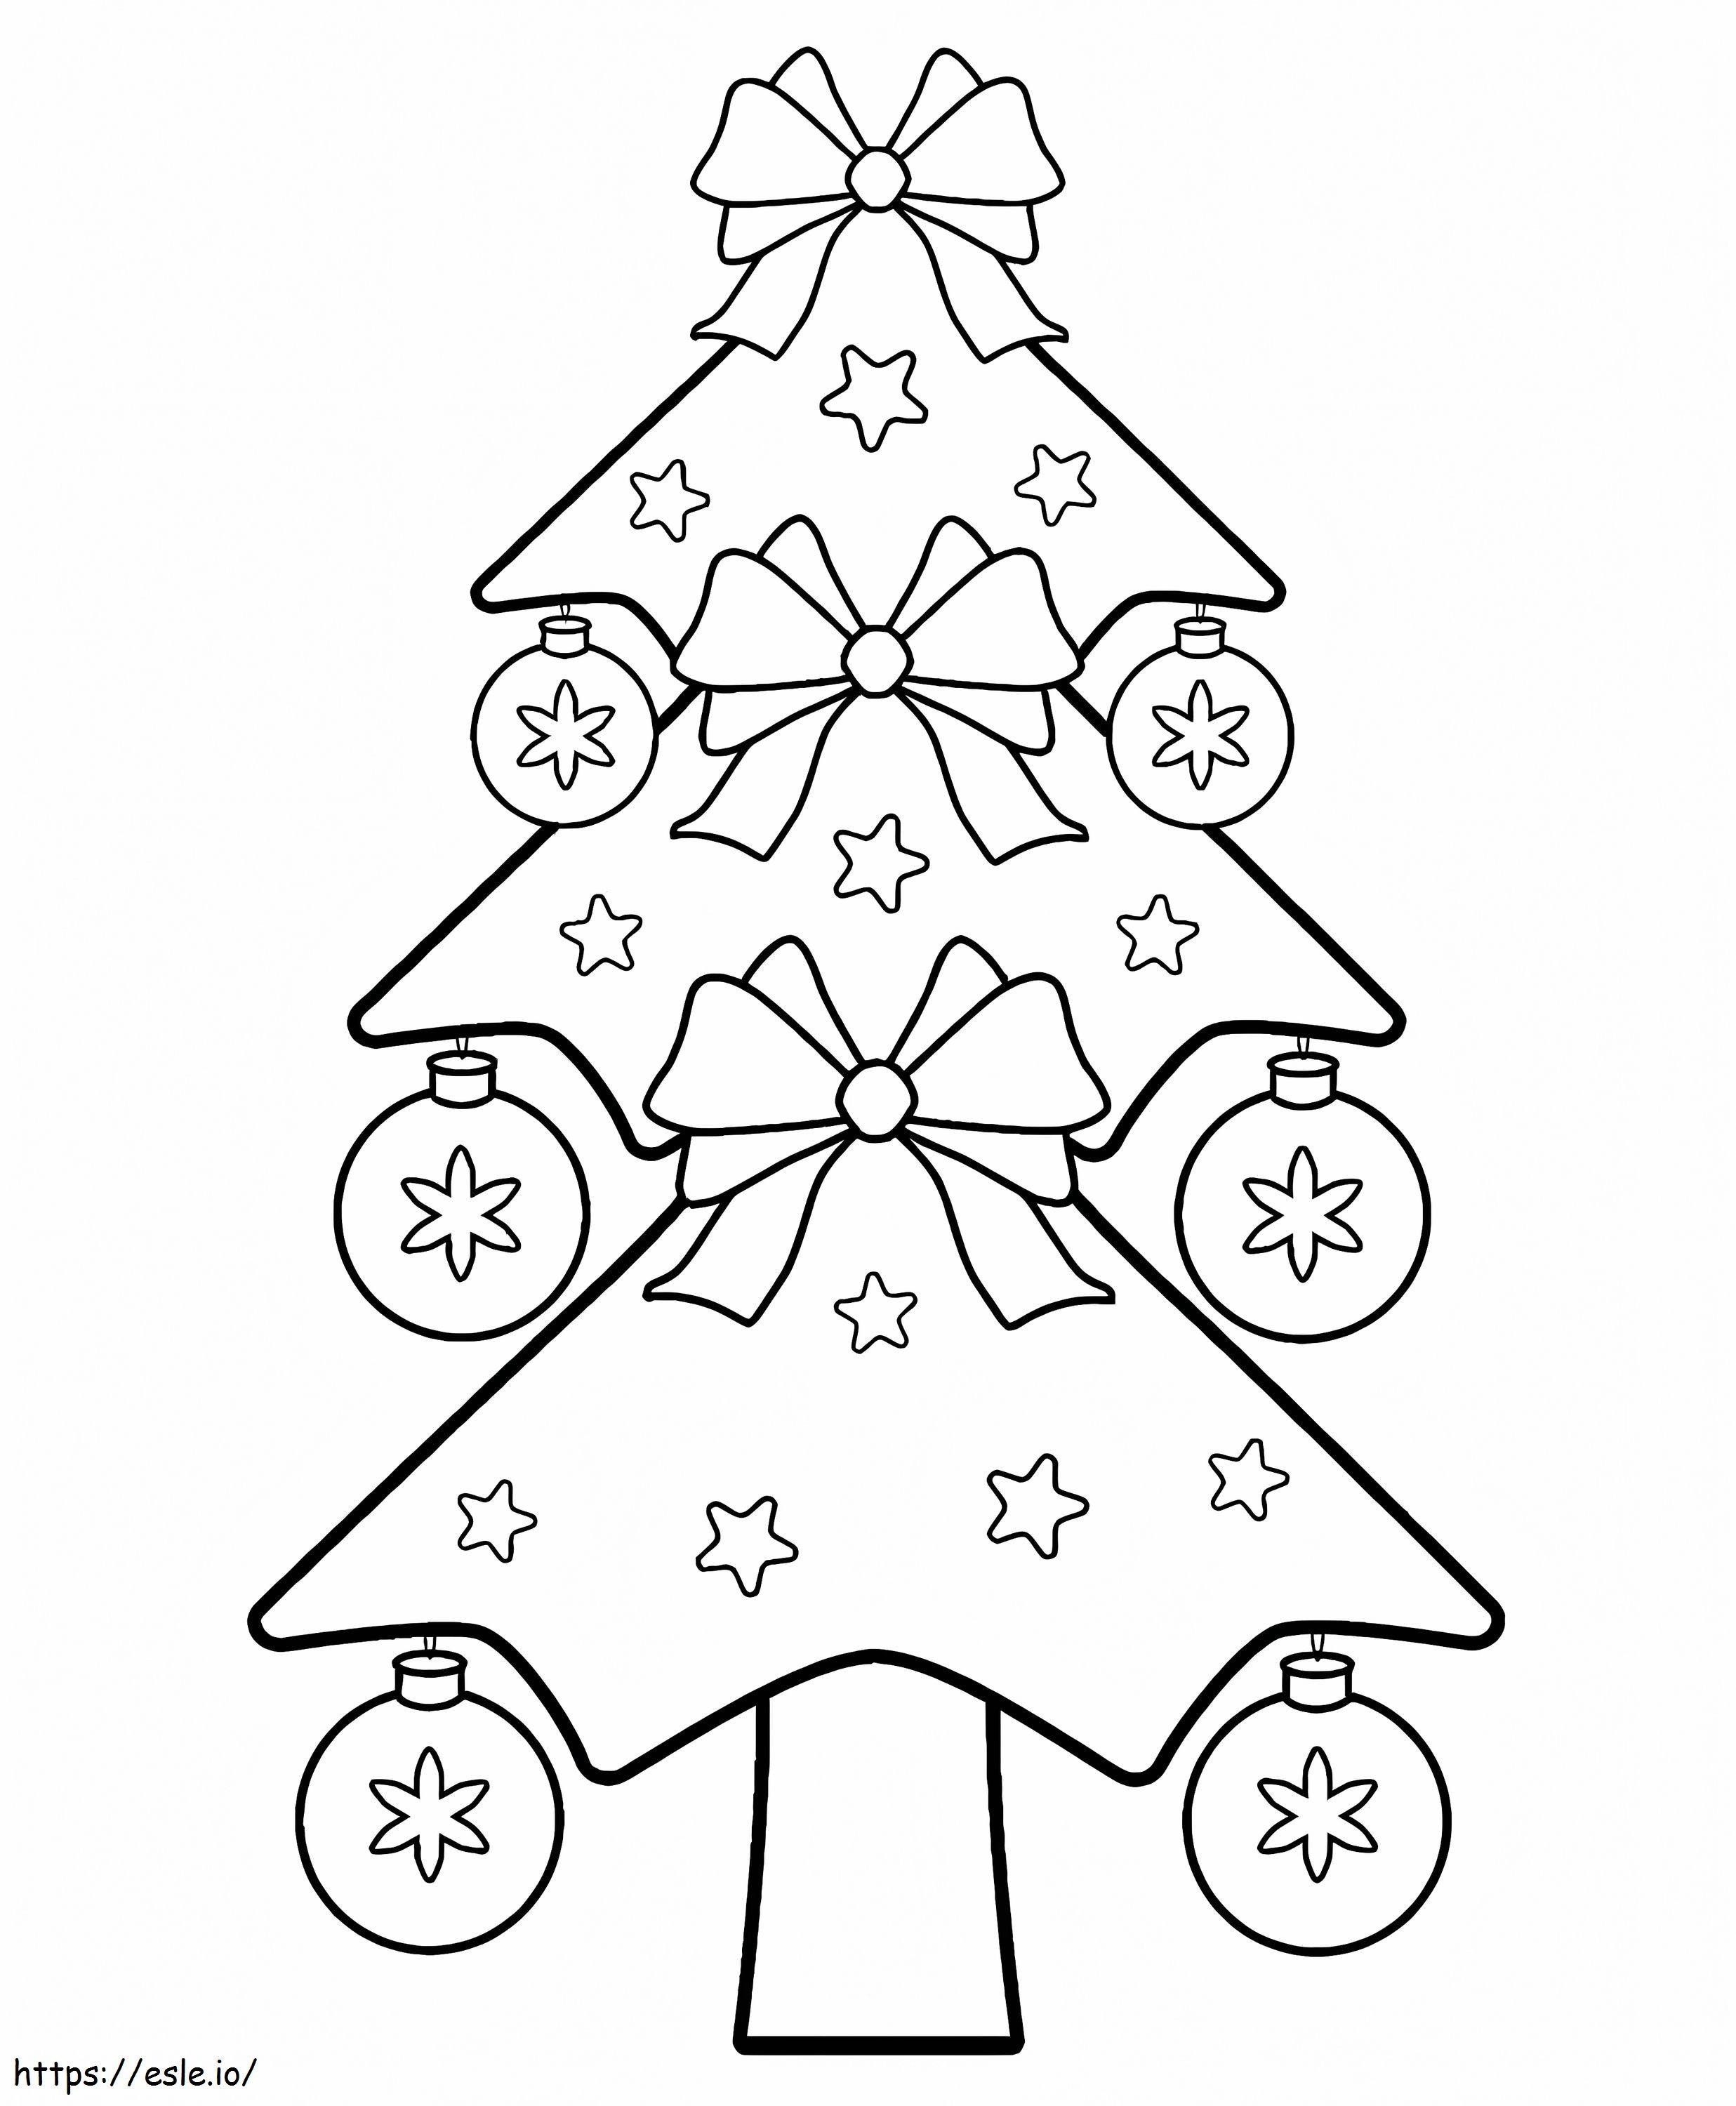 Adorable Christmas Tree coloring page